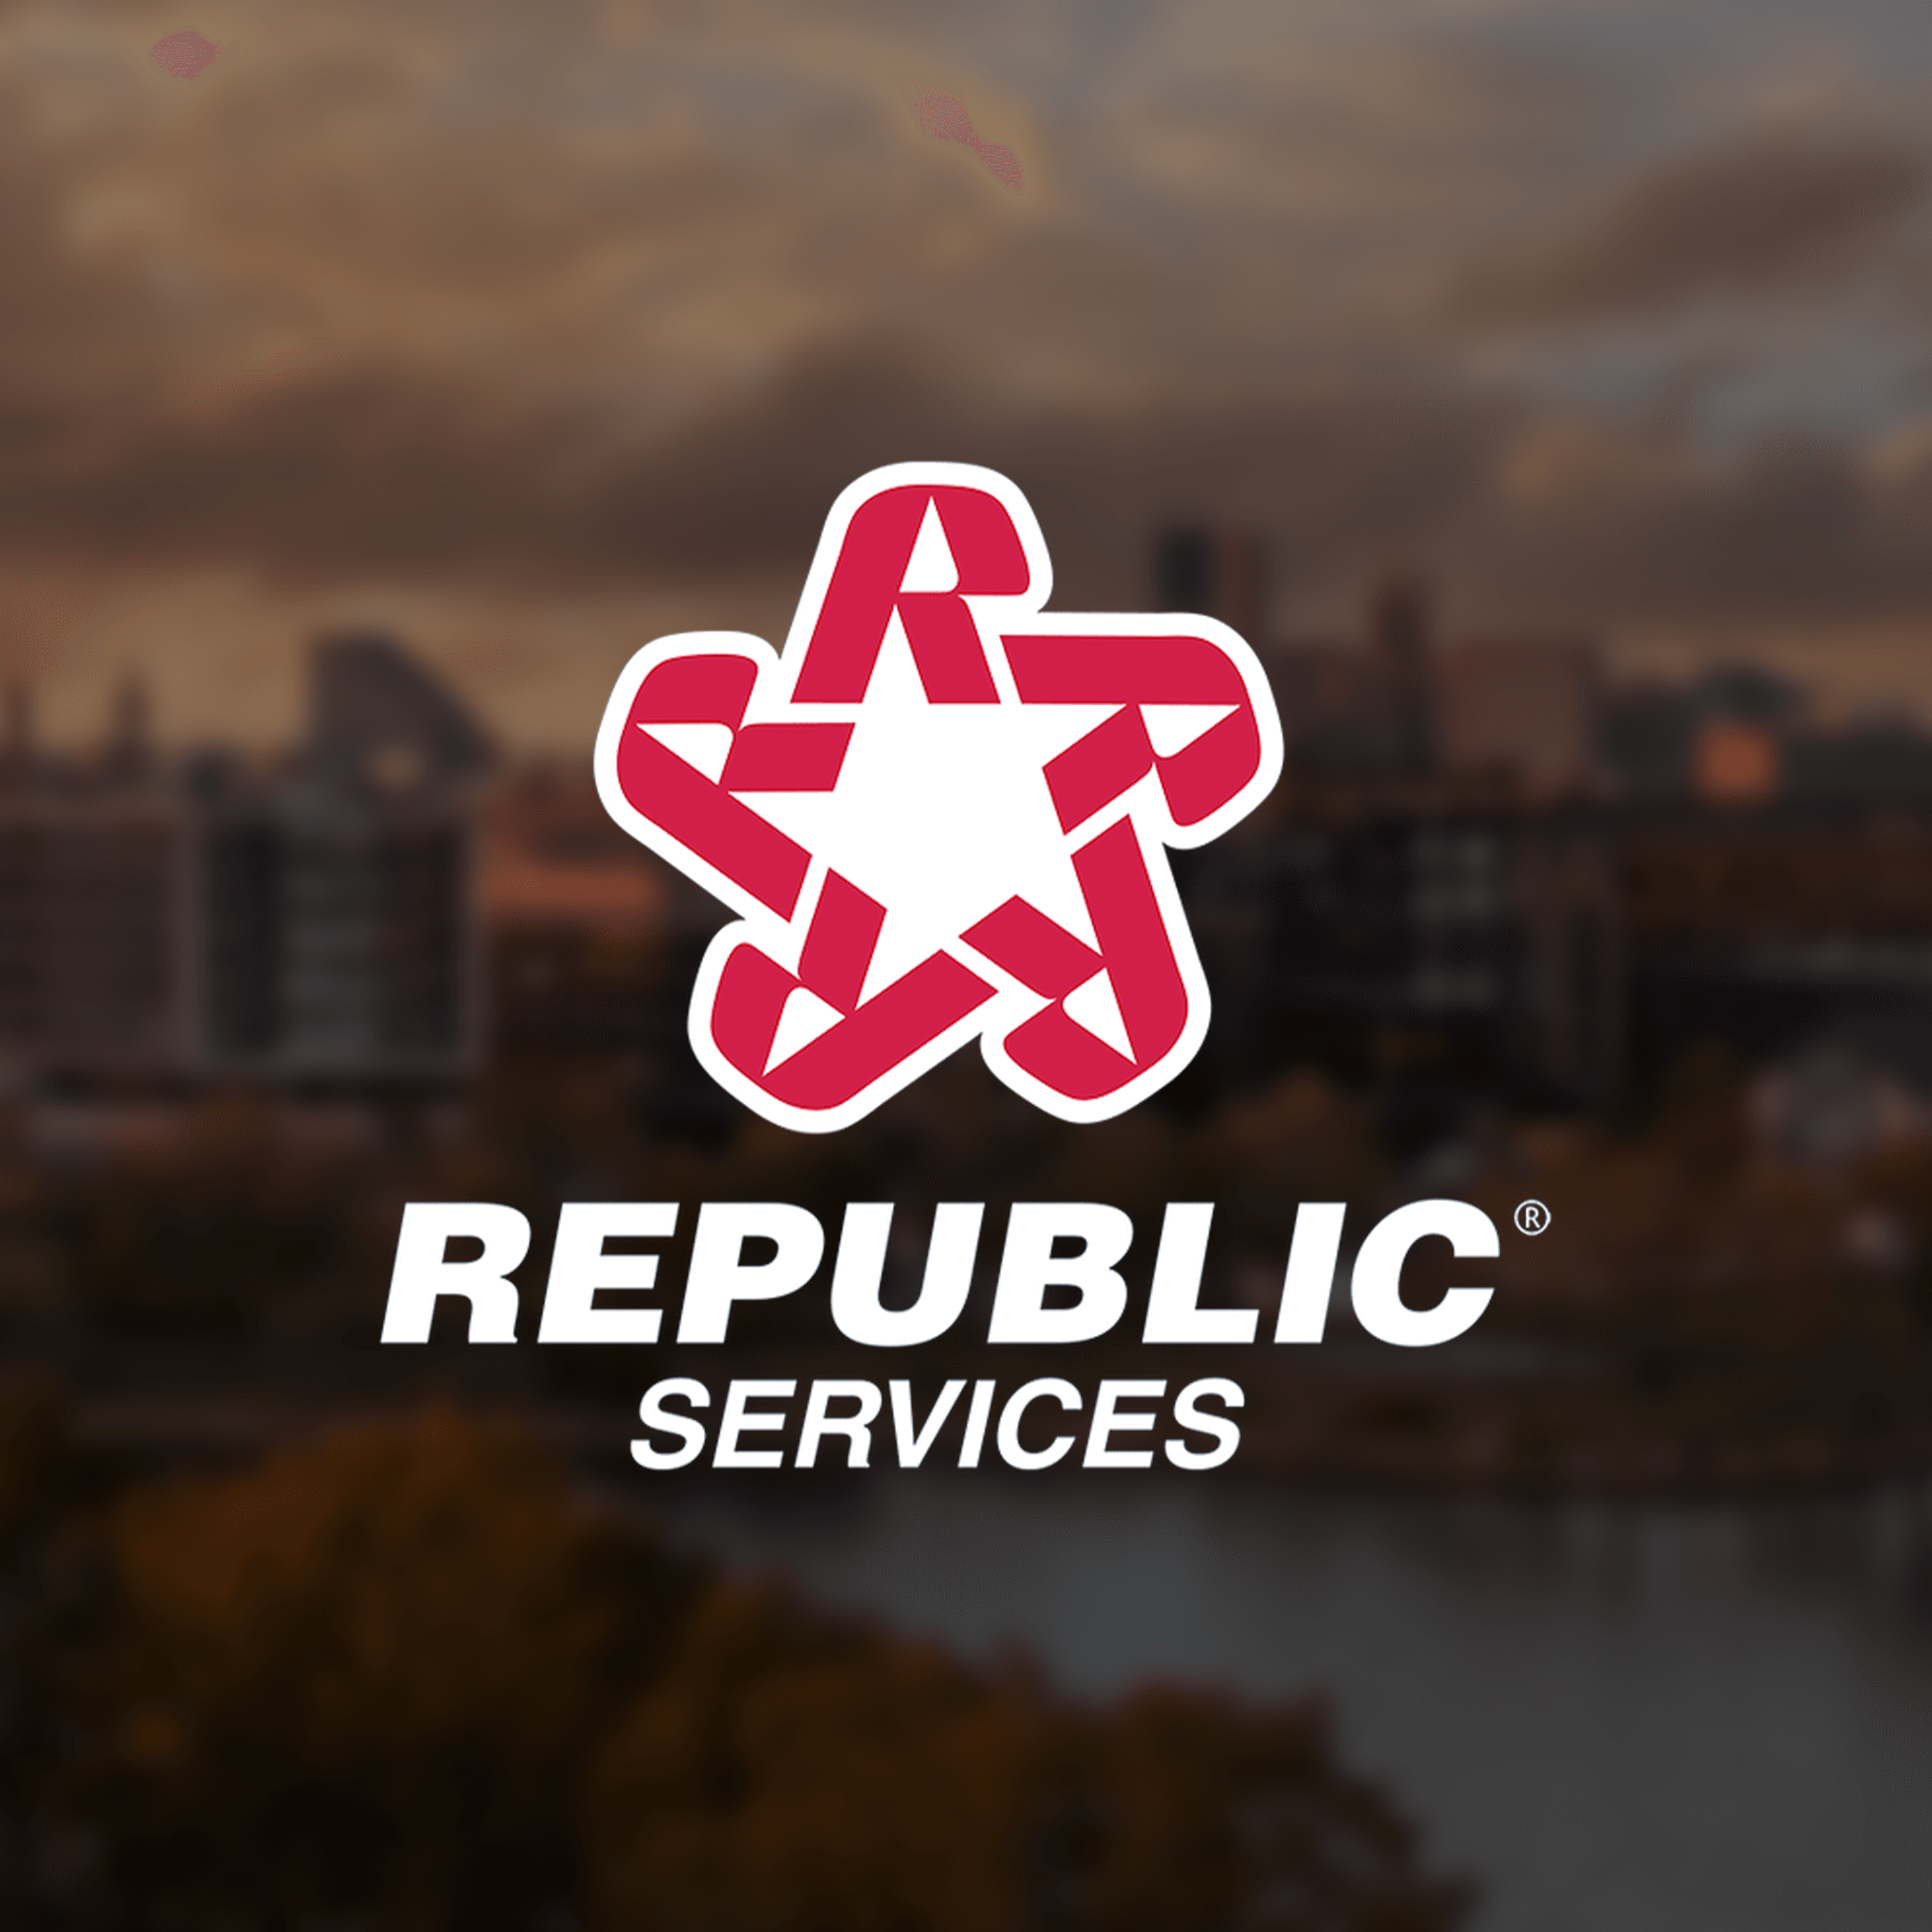 REPUBLIC SERVICES